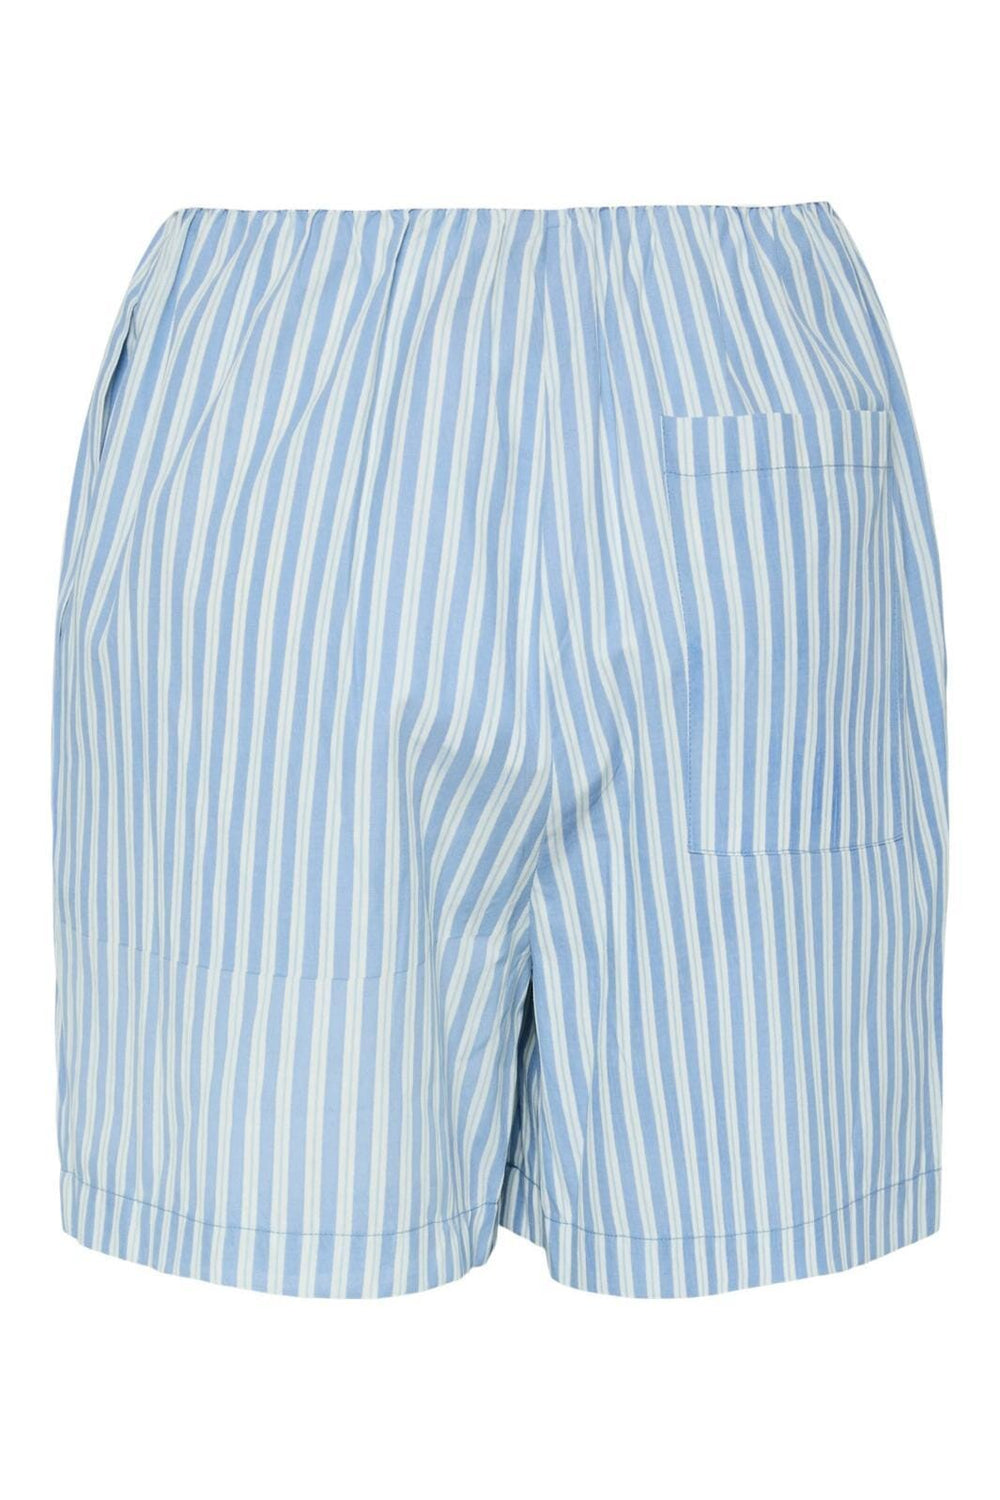 Pieces - Pcharper Shorts - 4715231 Cornflower Blue Falcon And White Shorts 